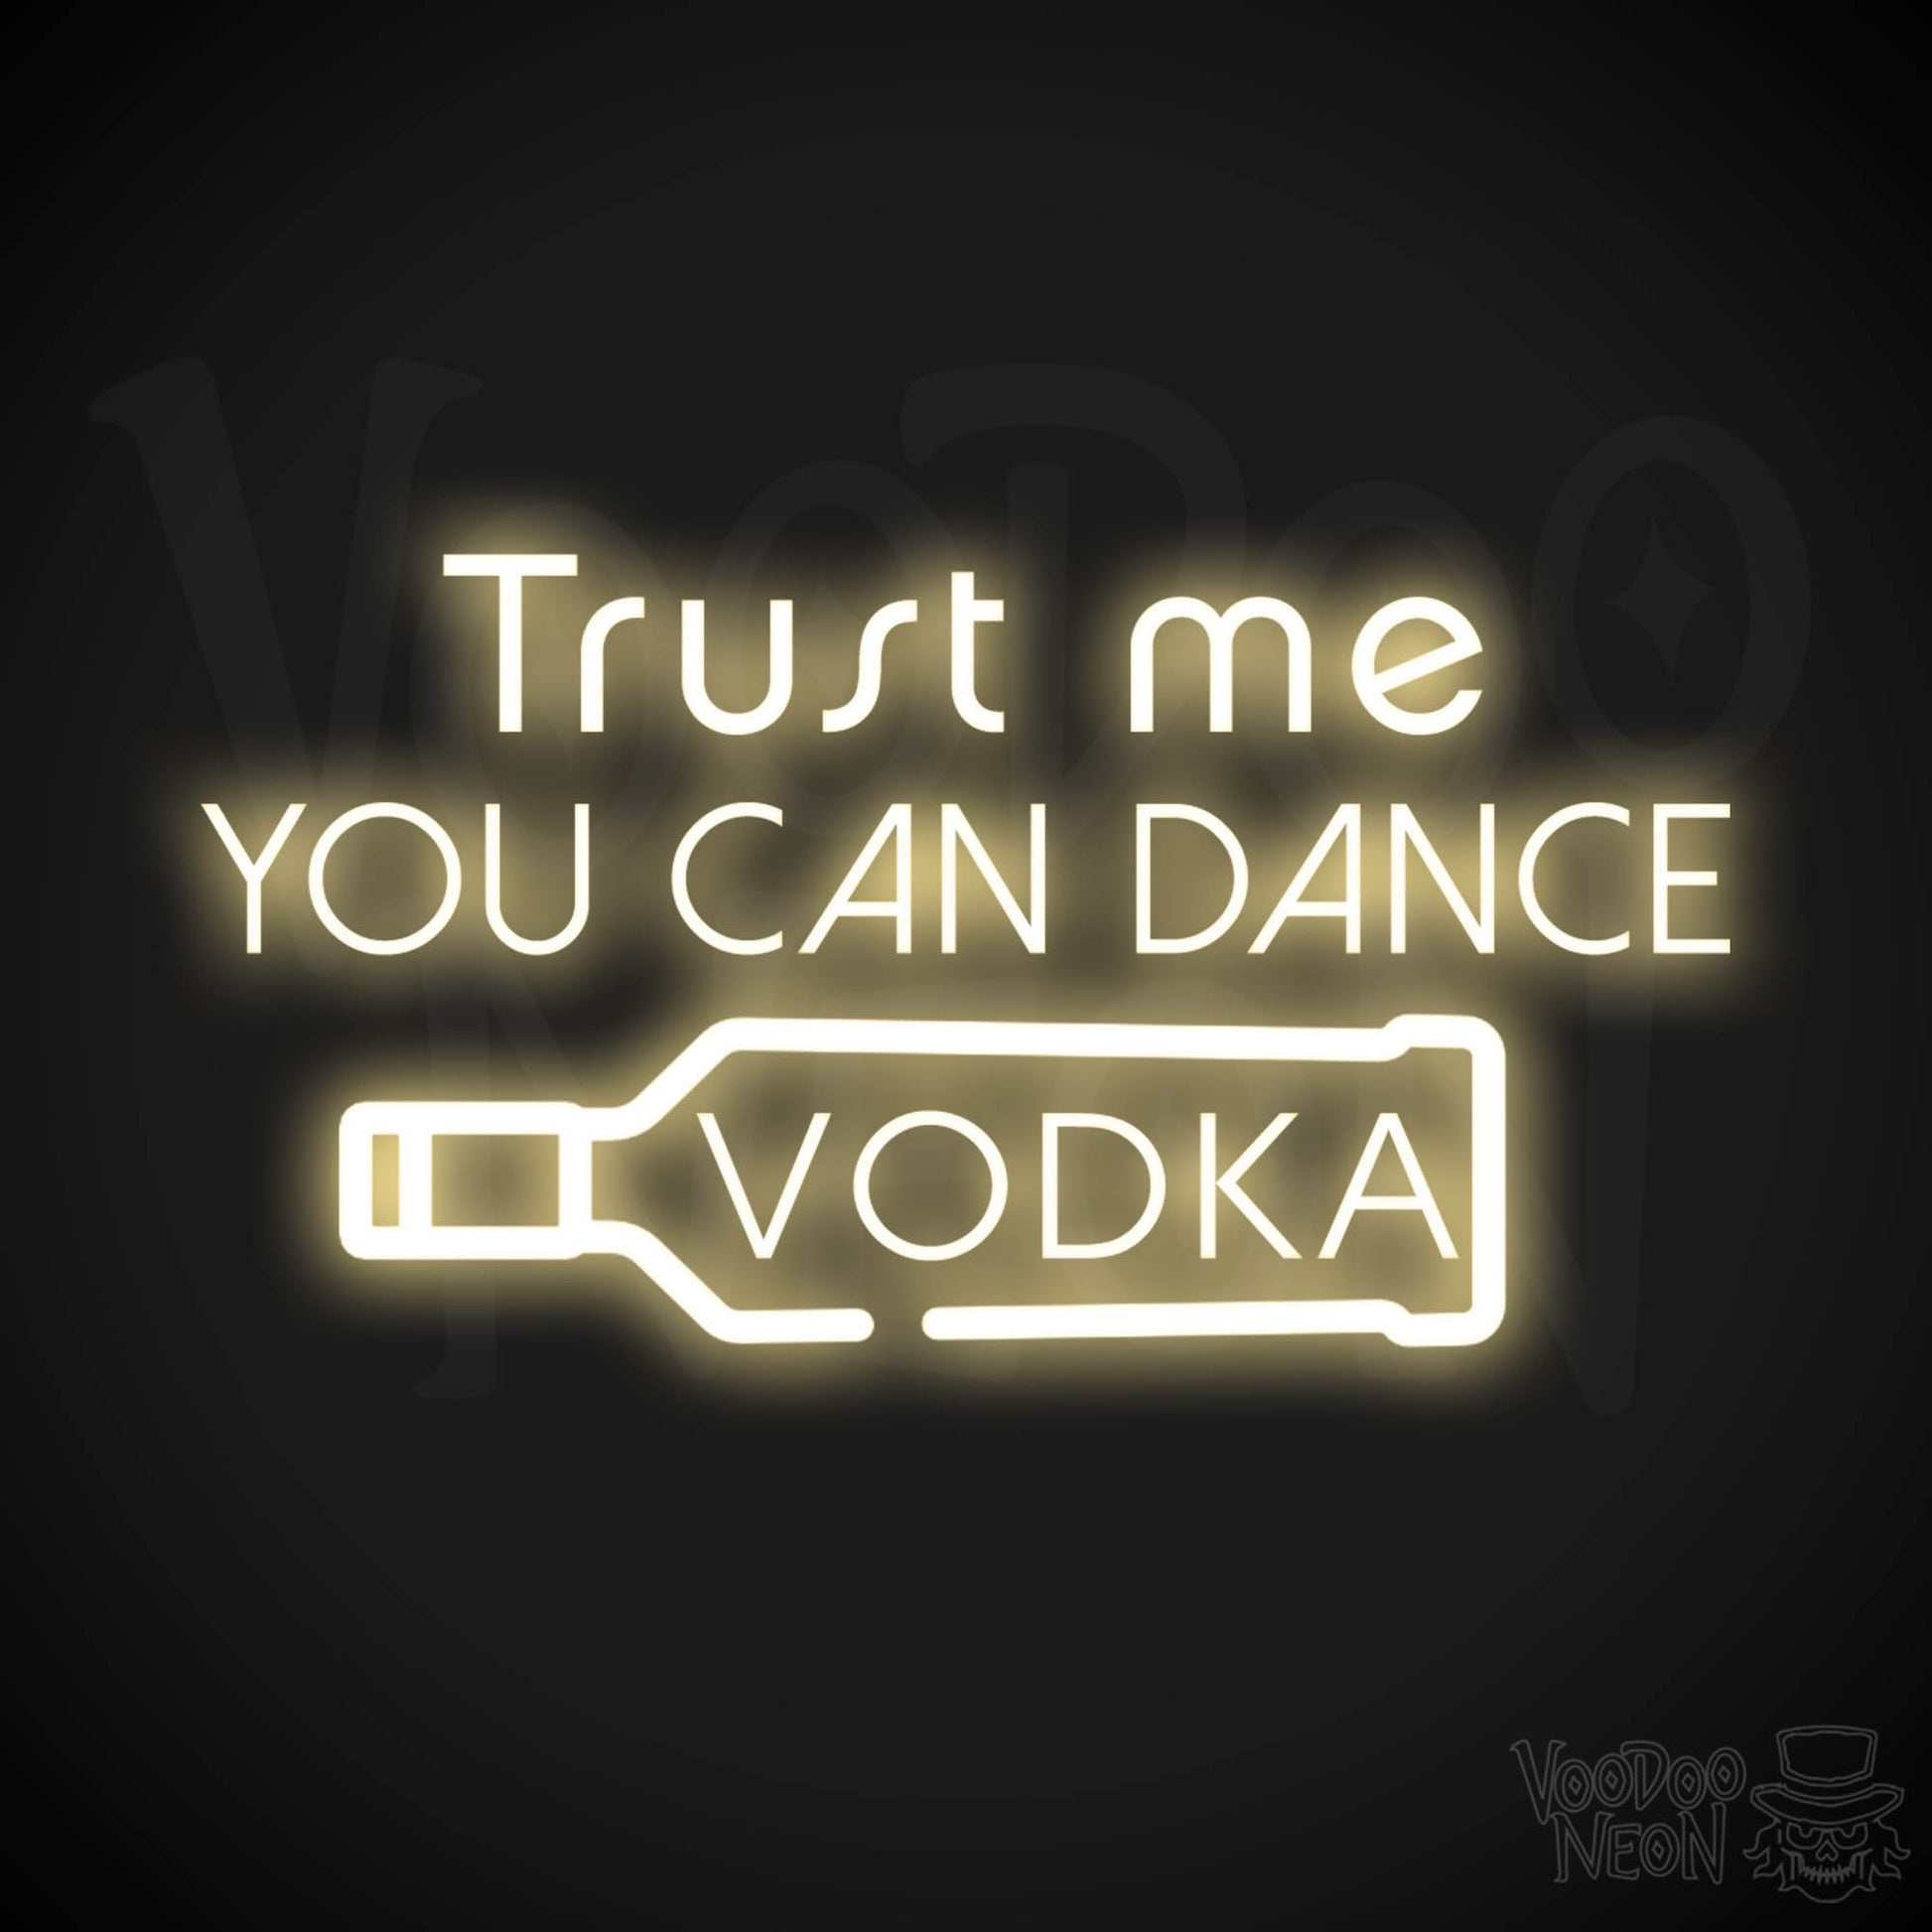 Trust Me You Can Dance Vodka Neon Sign - Vodka Bar Sign - LED Signs - Color Warm White